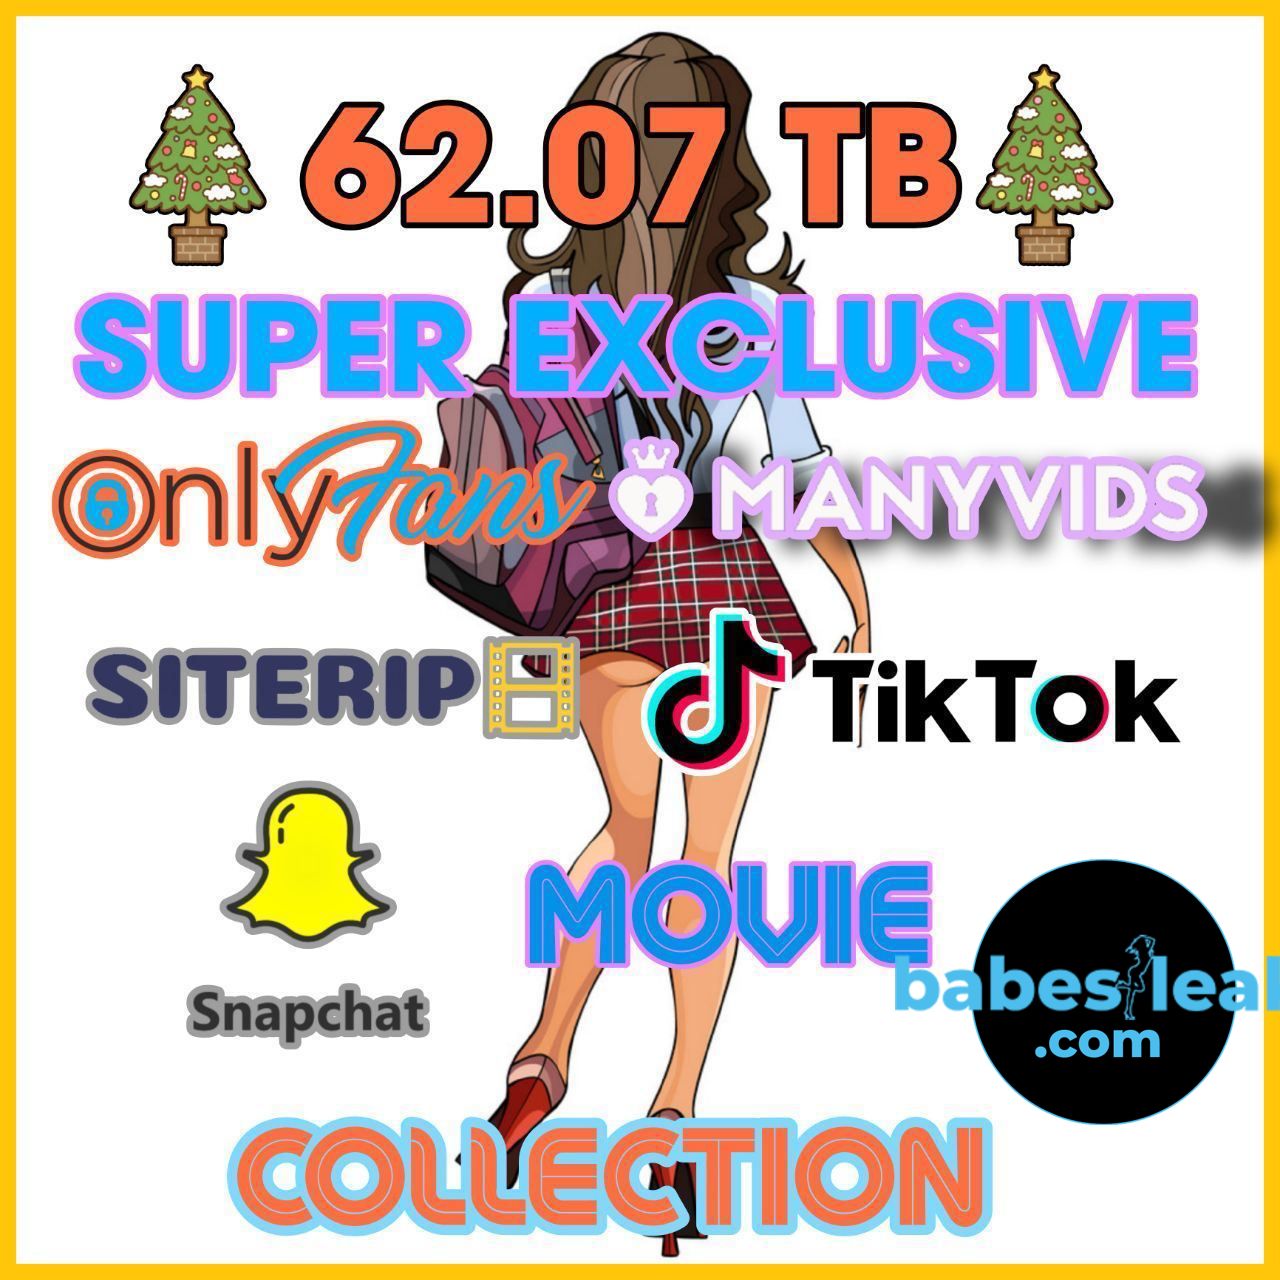 Mega Collection Onlyfans Manyvids Tiktok Snapchat Siterip Onlyfans